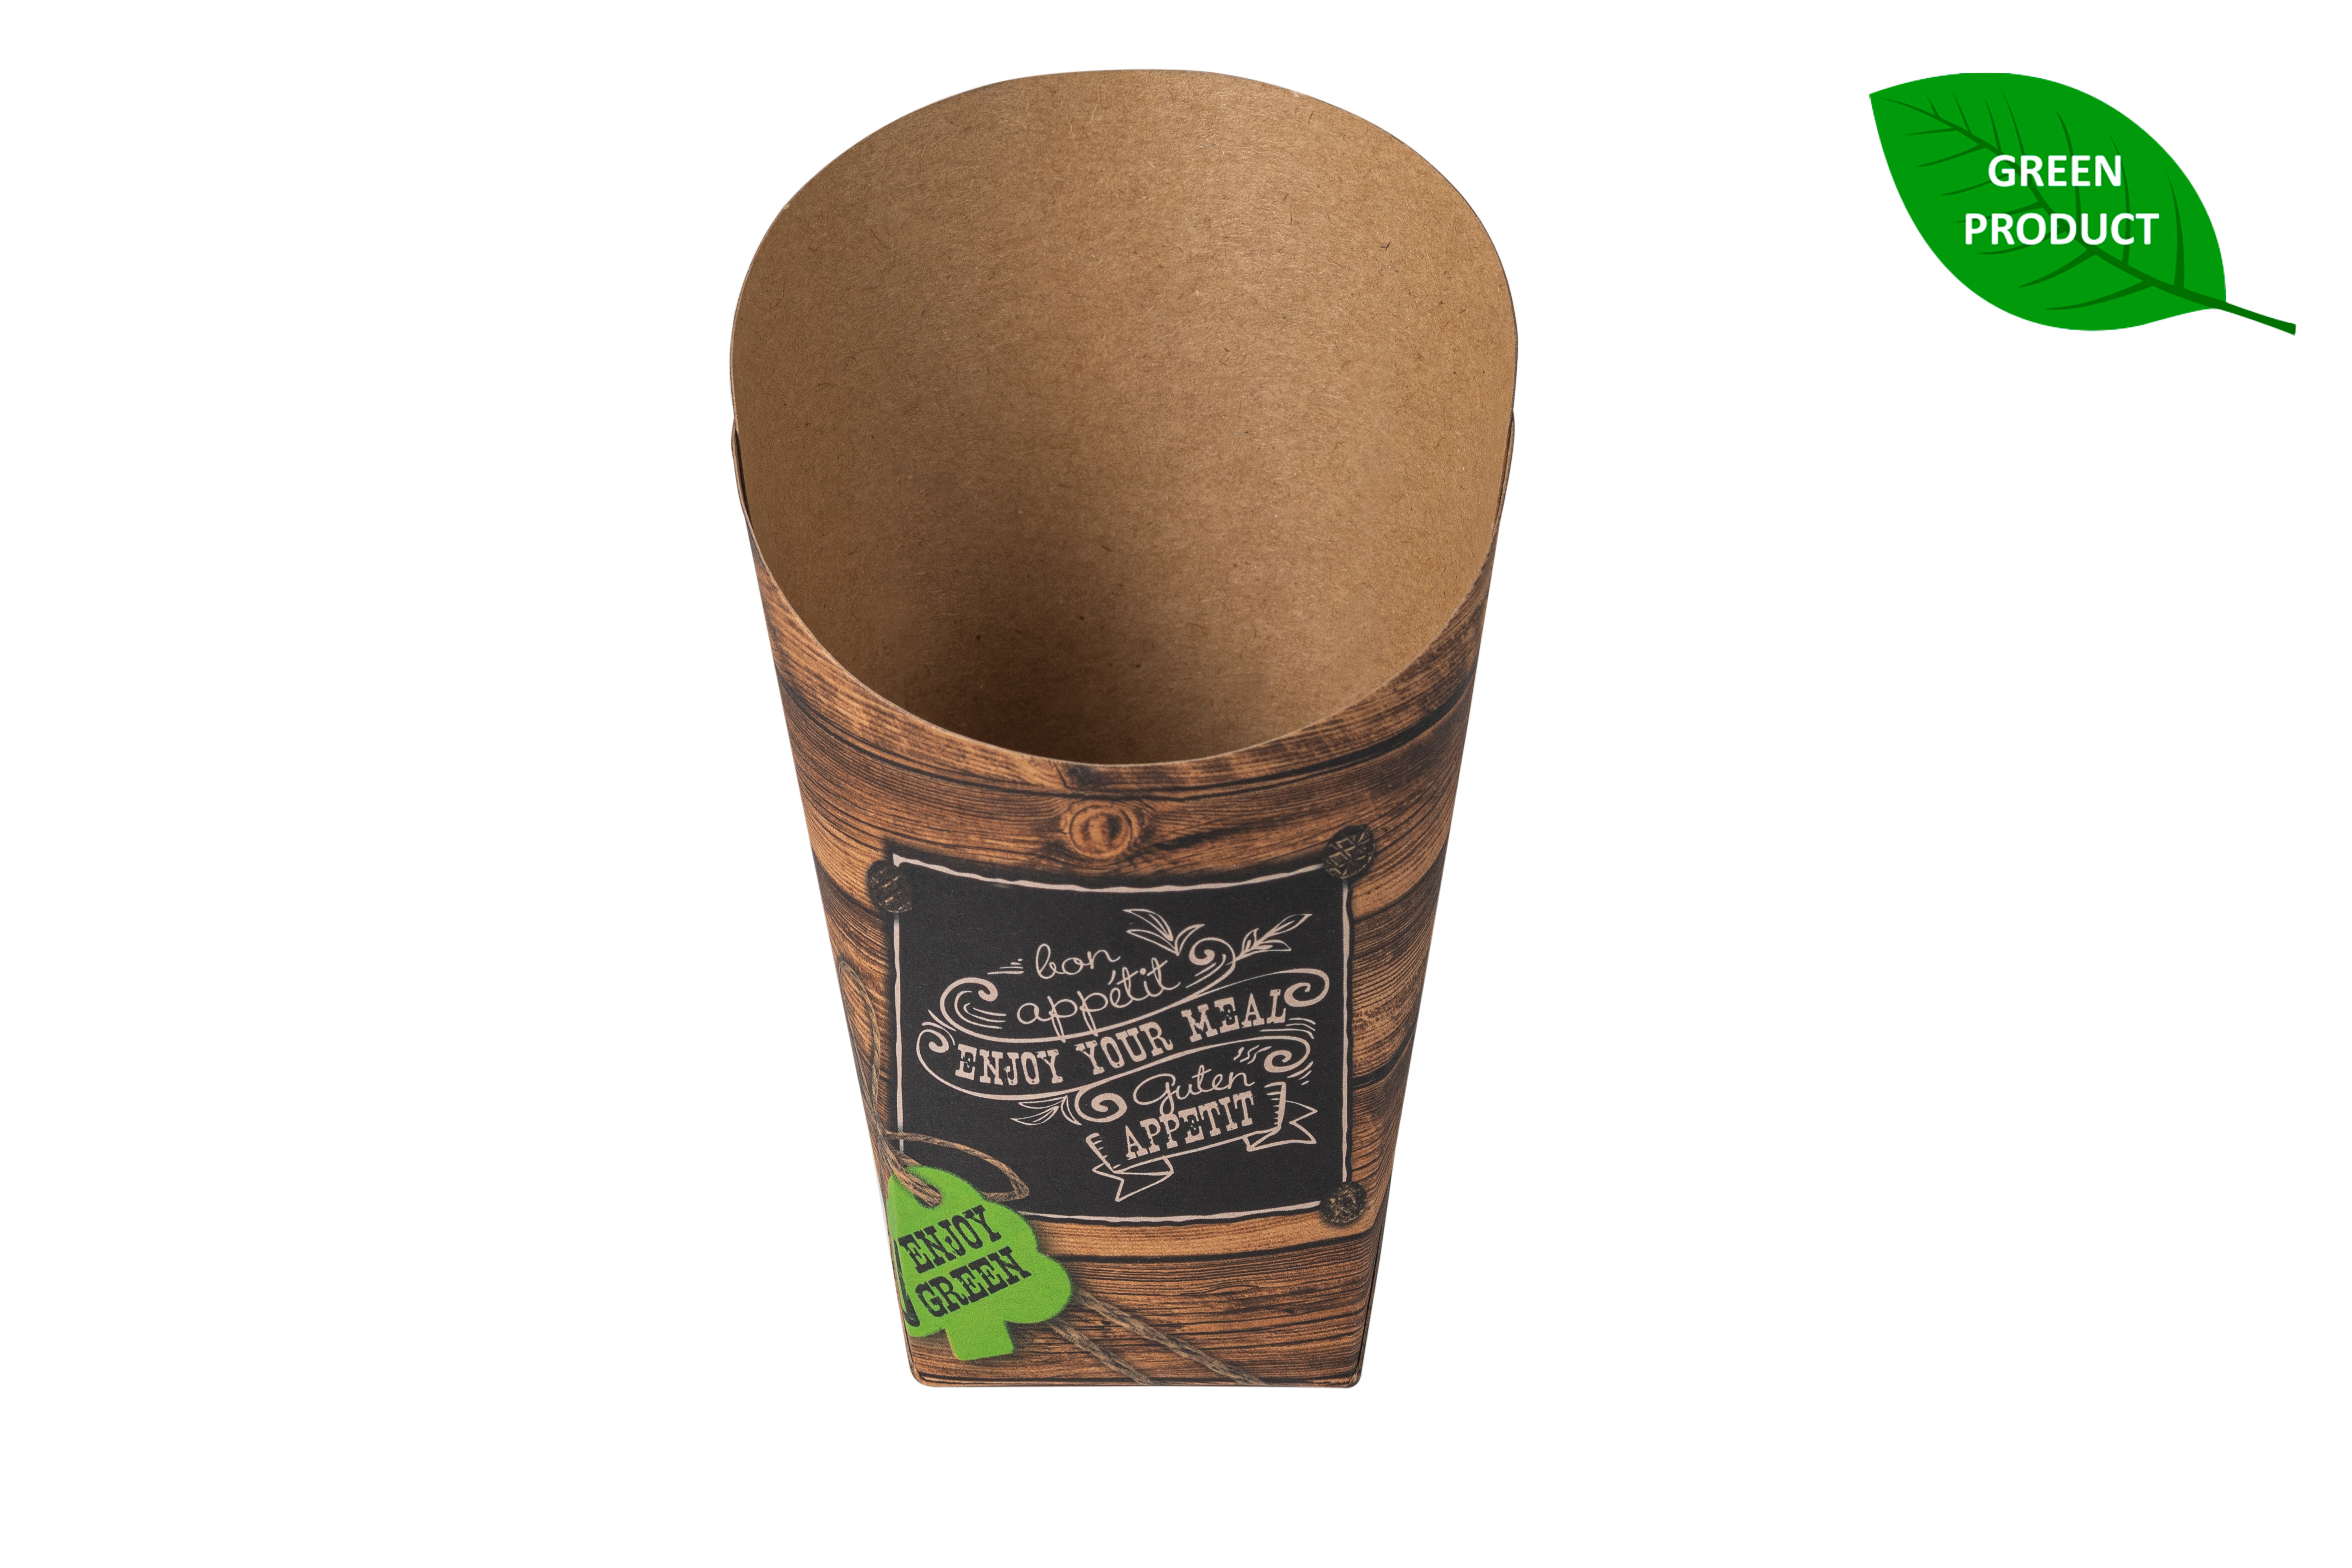 Wrap Cup "Enjoy Green", 4,7 x 7,6 x 12,6 cm, 1000 Stk/Ktn